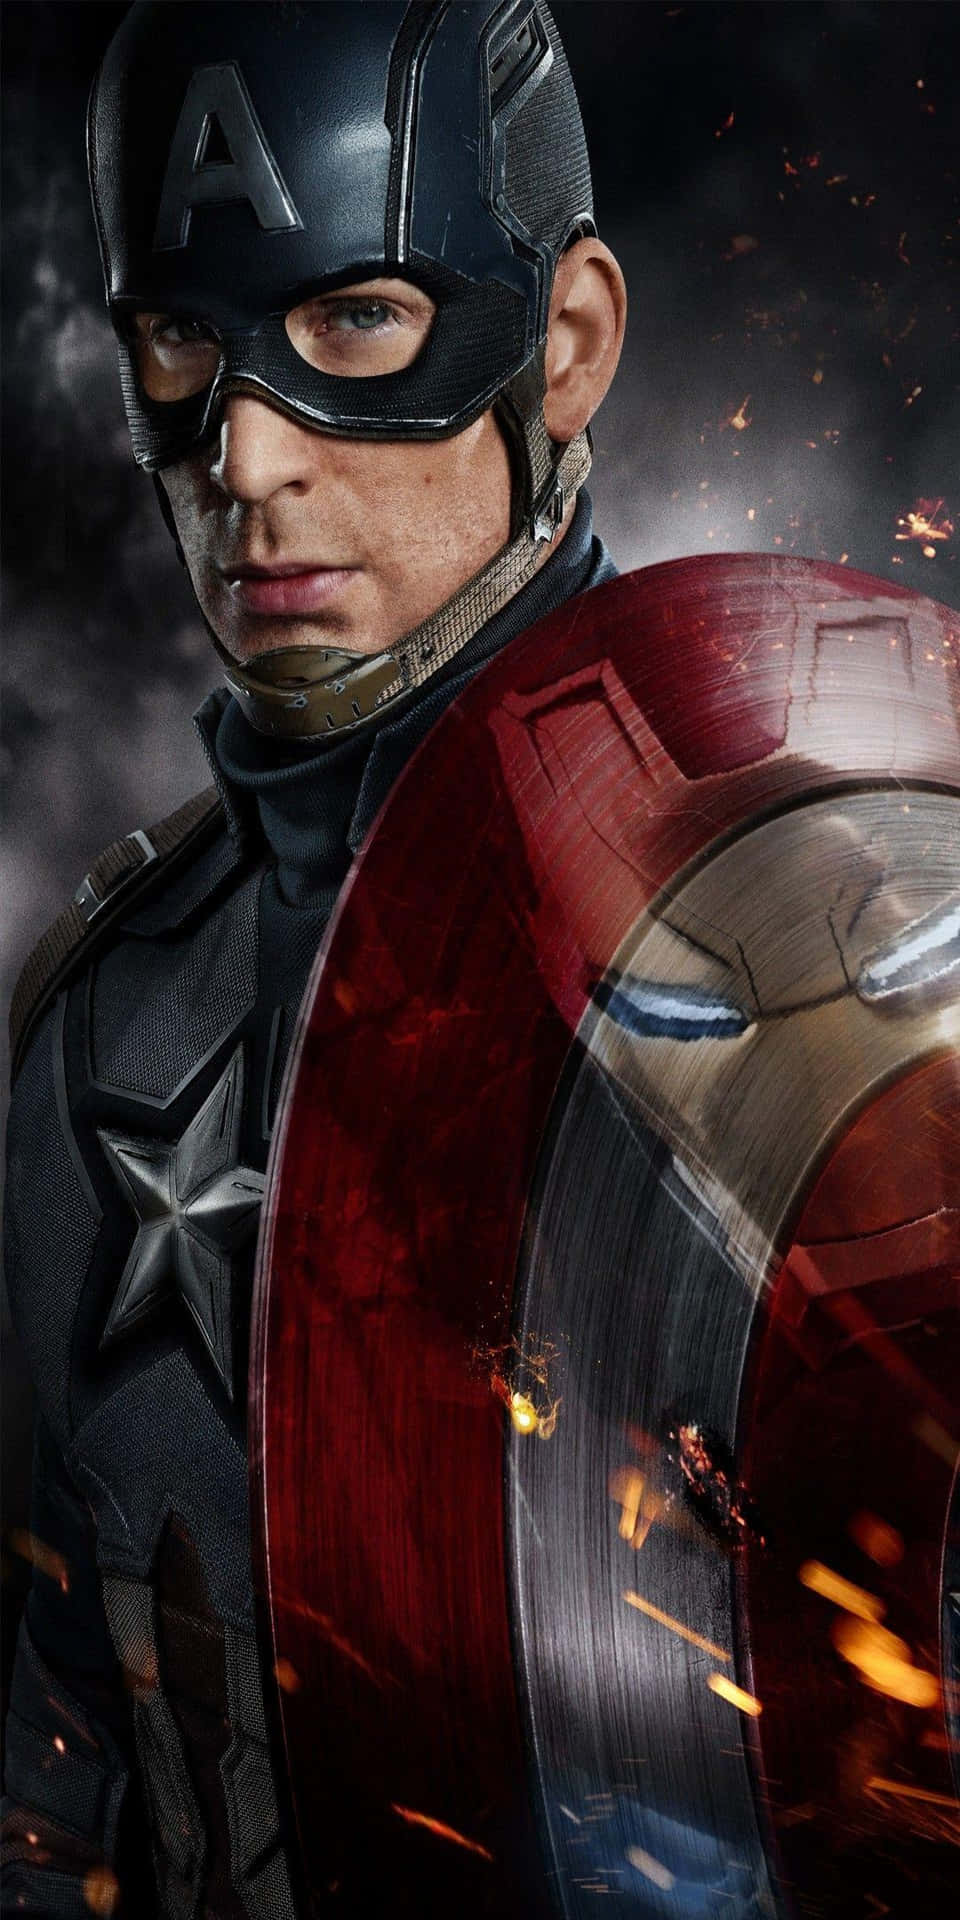 Pixel3 Hintergrundbild Mit Captain America Als Superheld